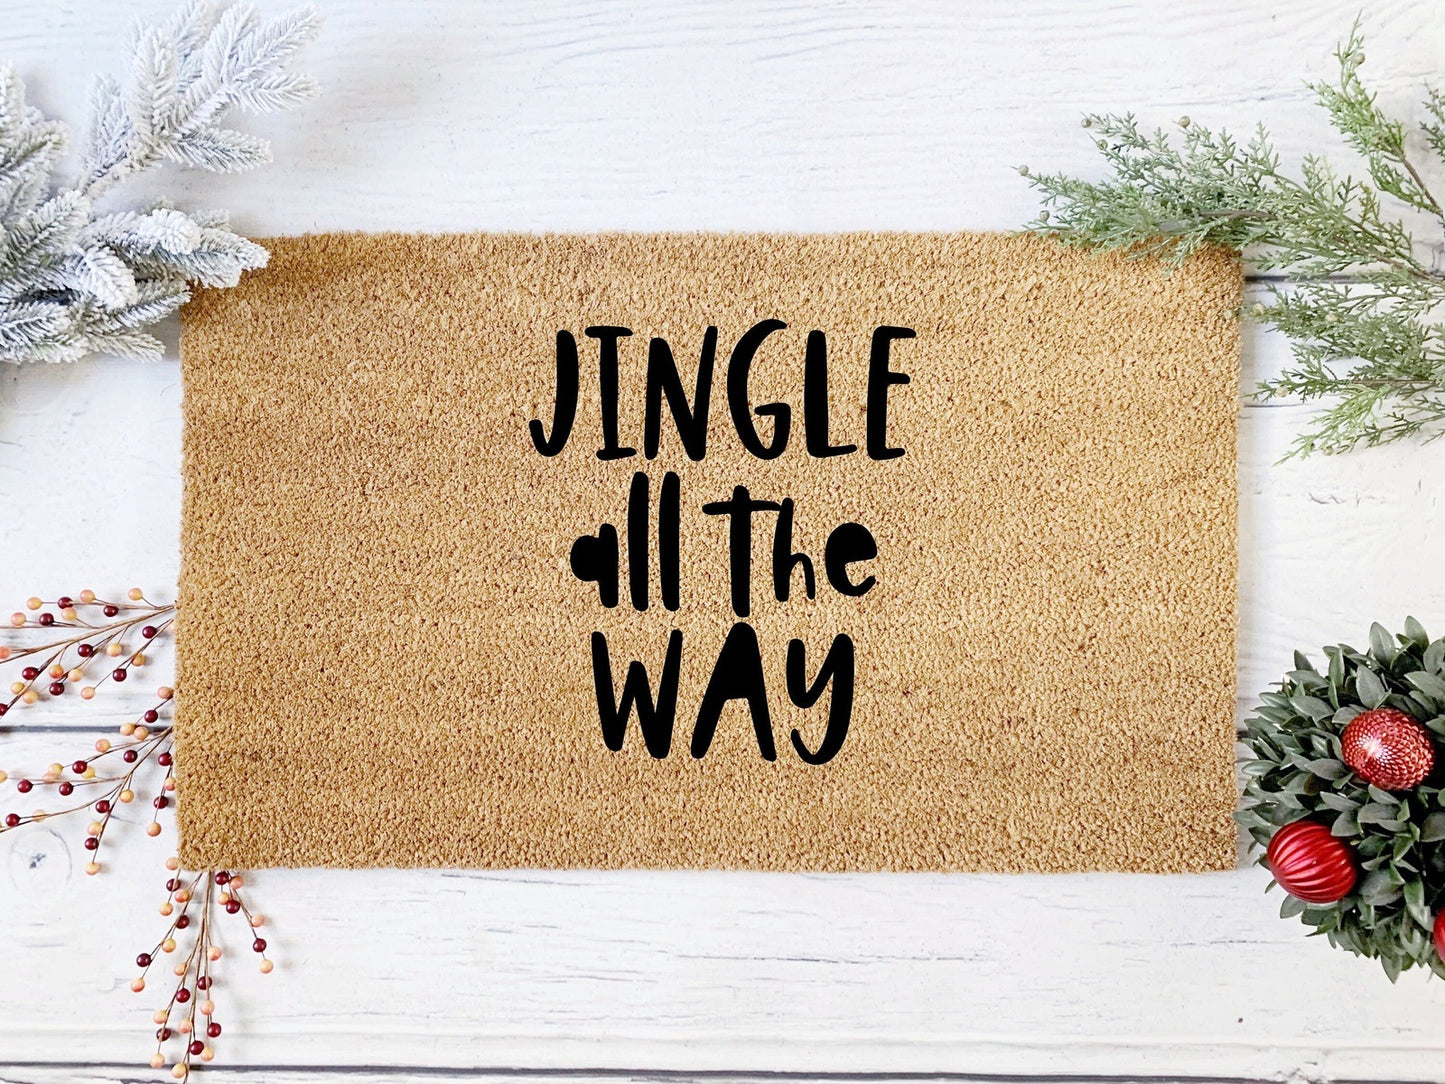 Jingle All The Way Christmas Doormat